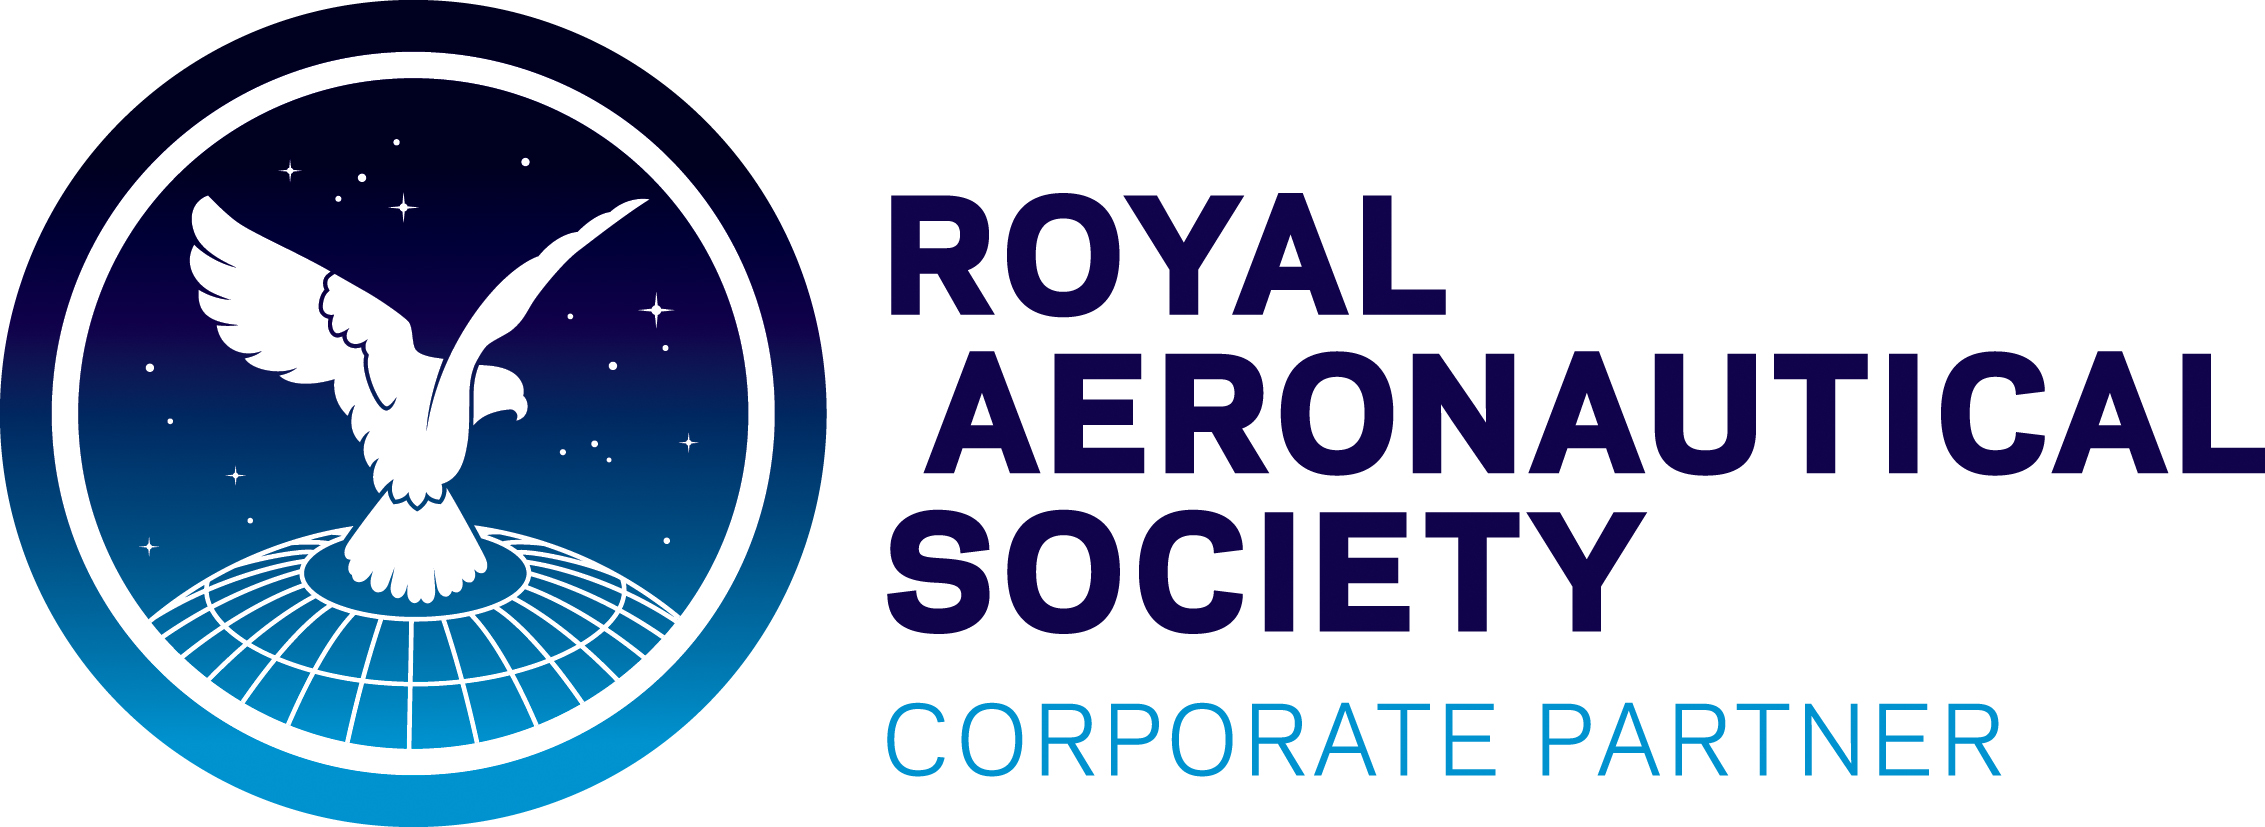 Royal Aeronautical Society Partner